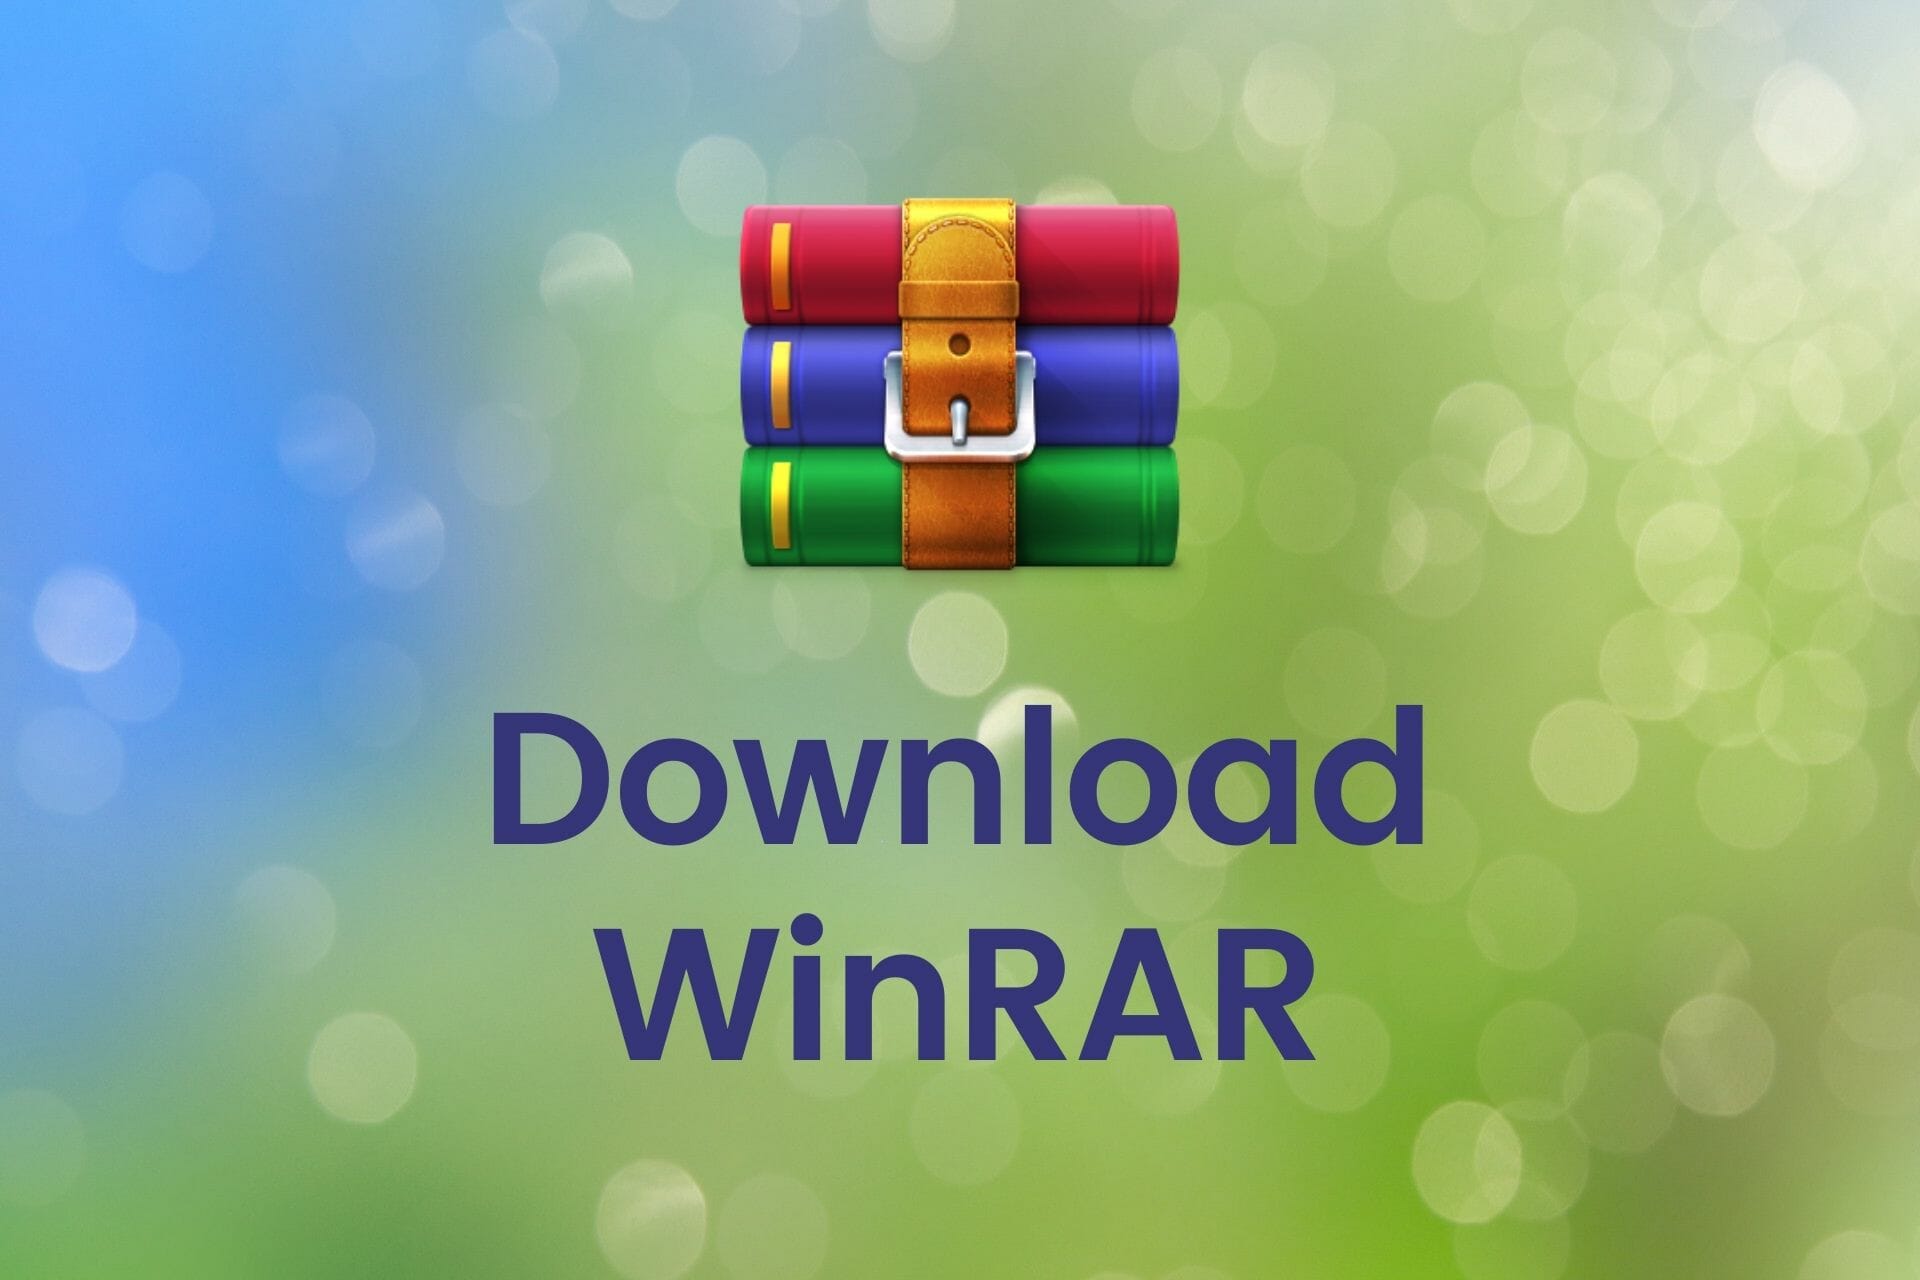 winrar download 64 bit windows 7 free